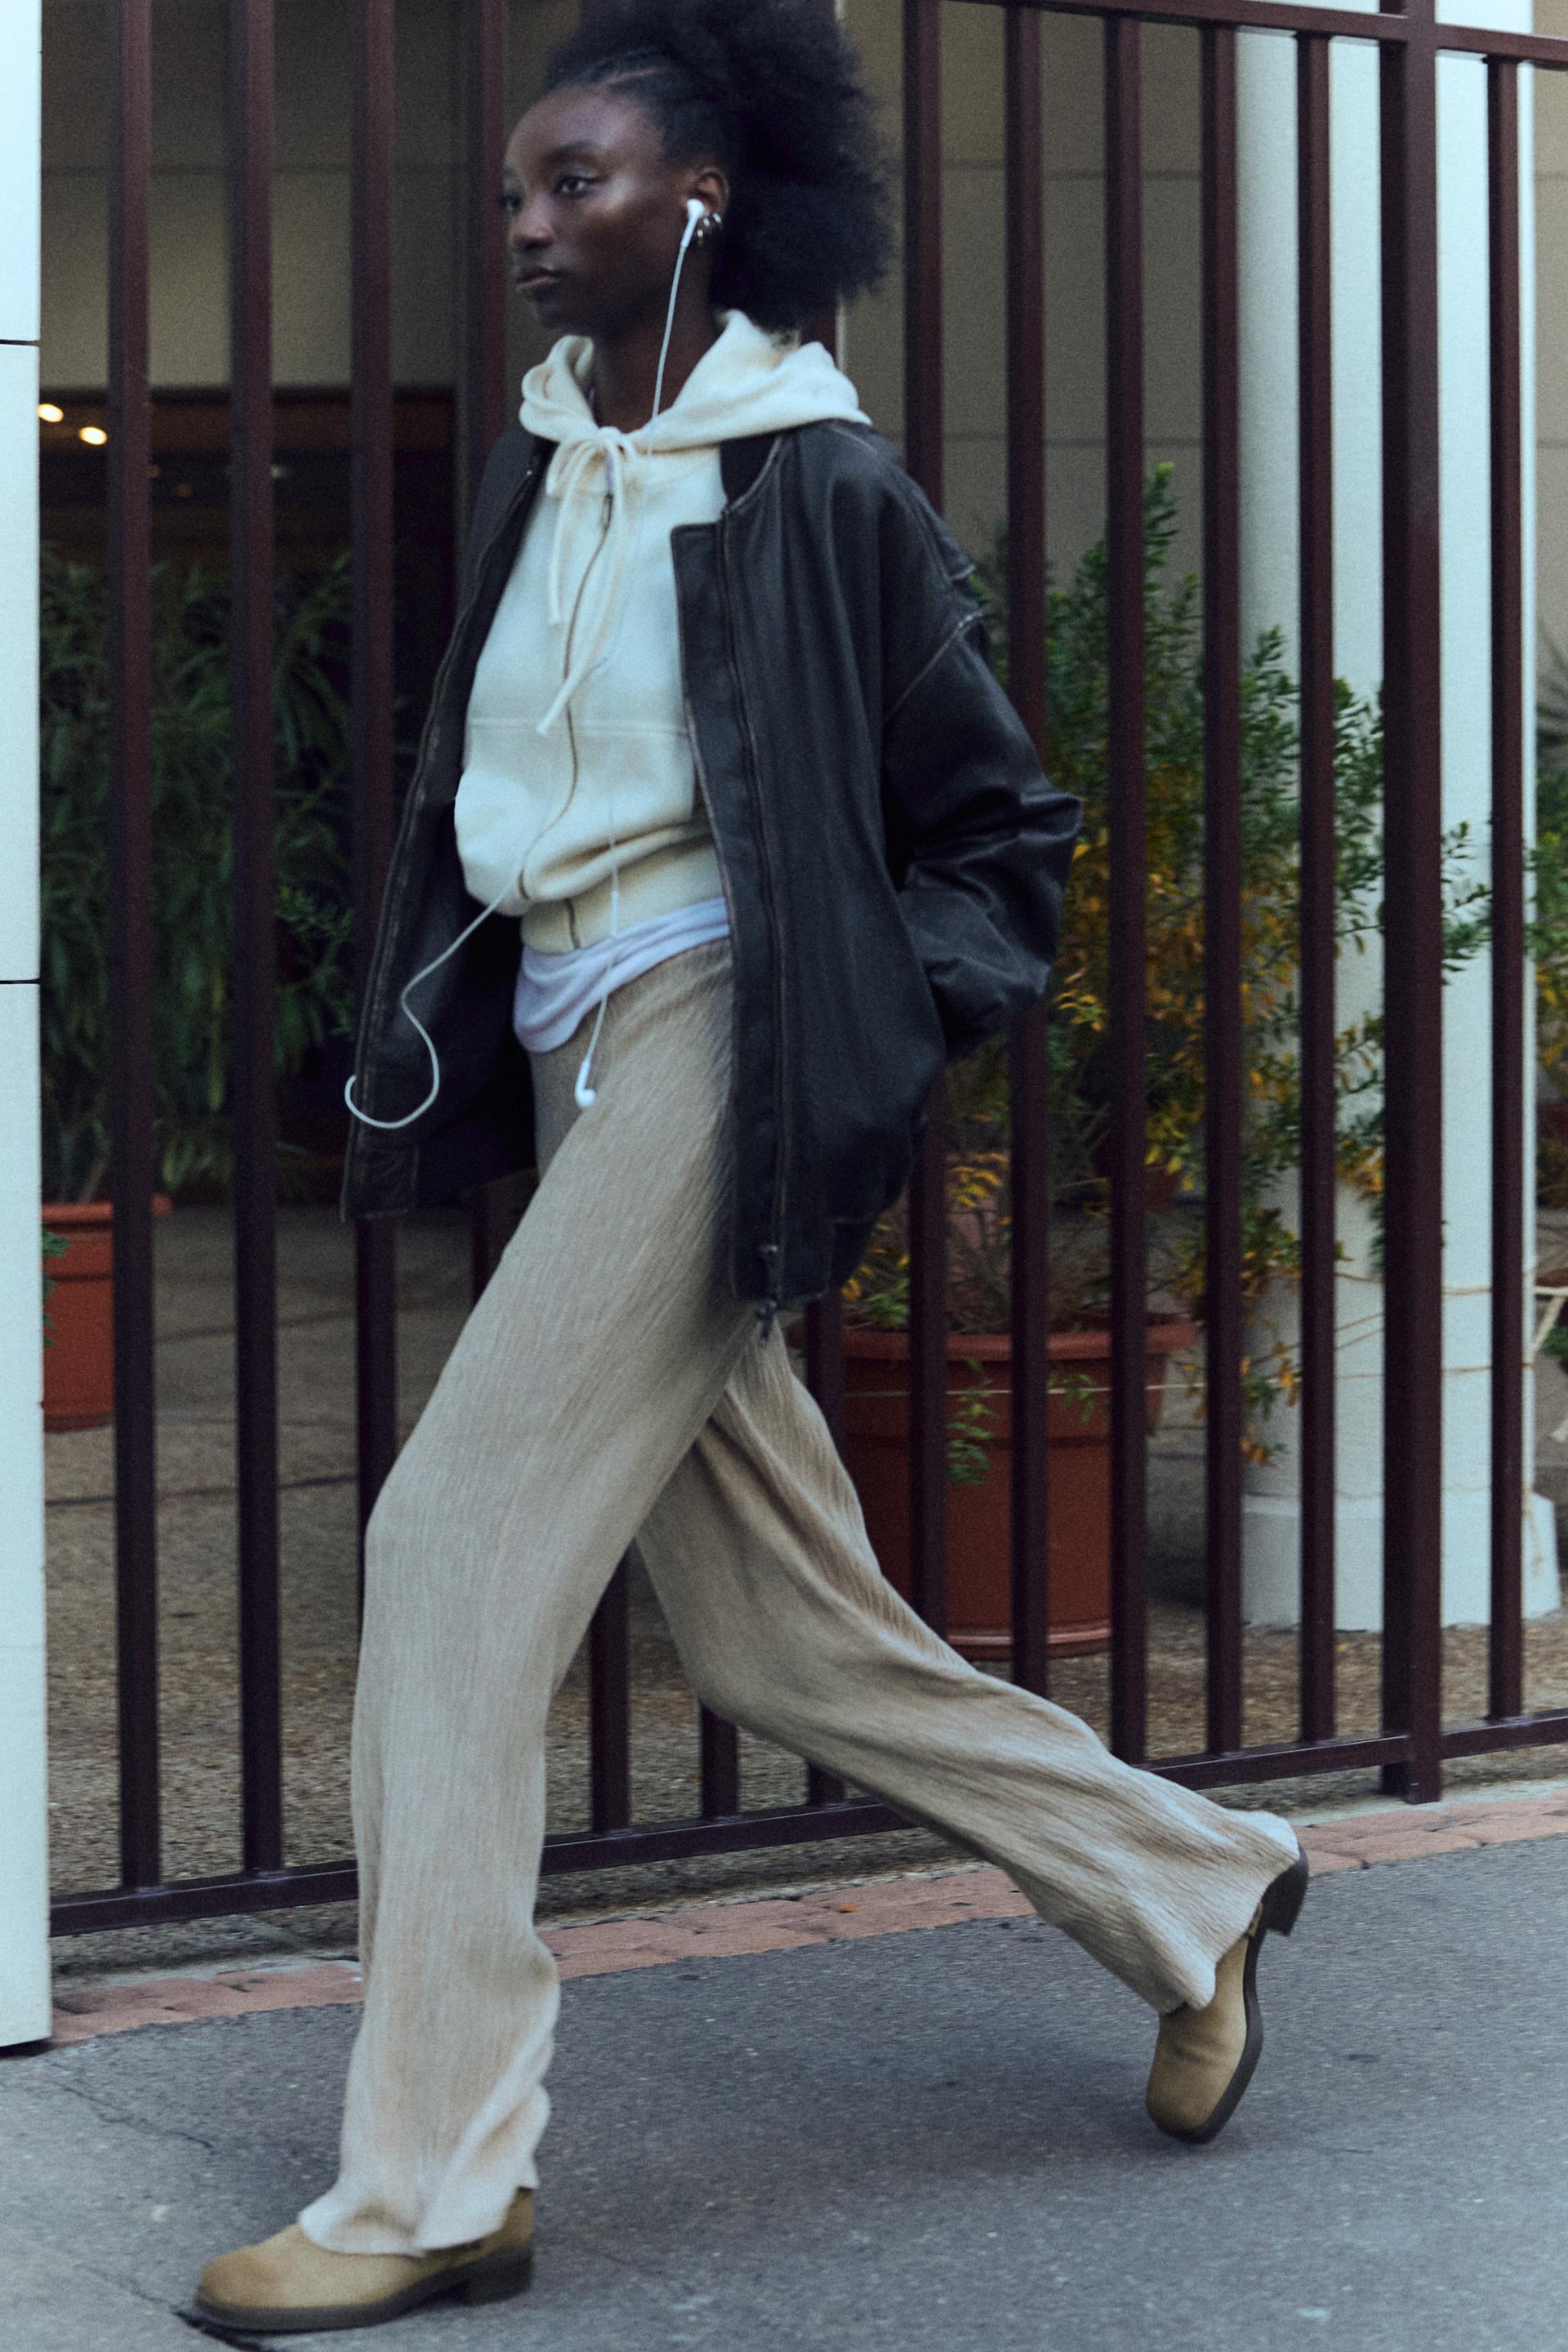 Zara Zara Buttoned Slouchy Pants XS Camel Tan Womens Pull On Tape